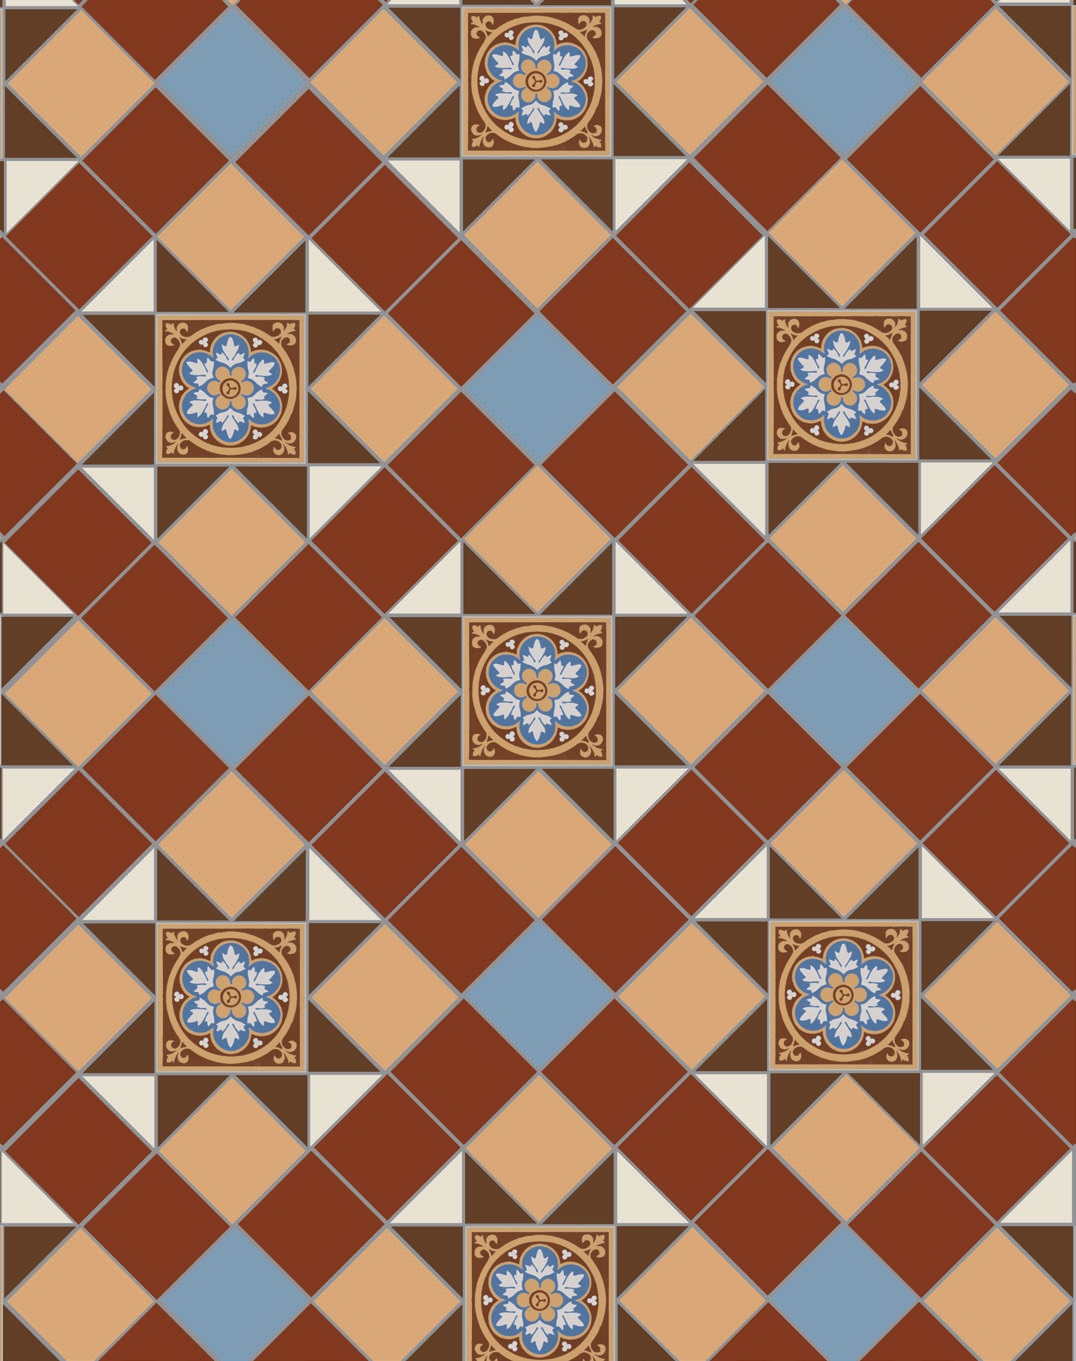 Original Style Victorian Floor Tiles Blenheim Pattern 5 Colourredblue